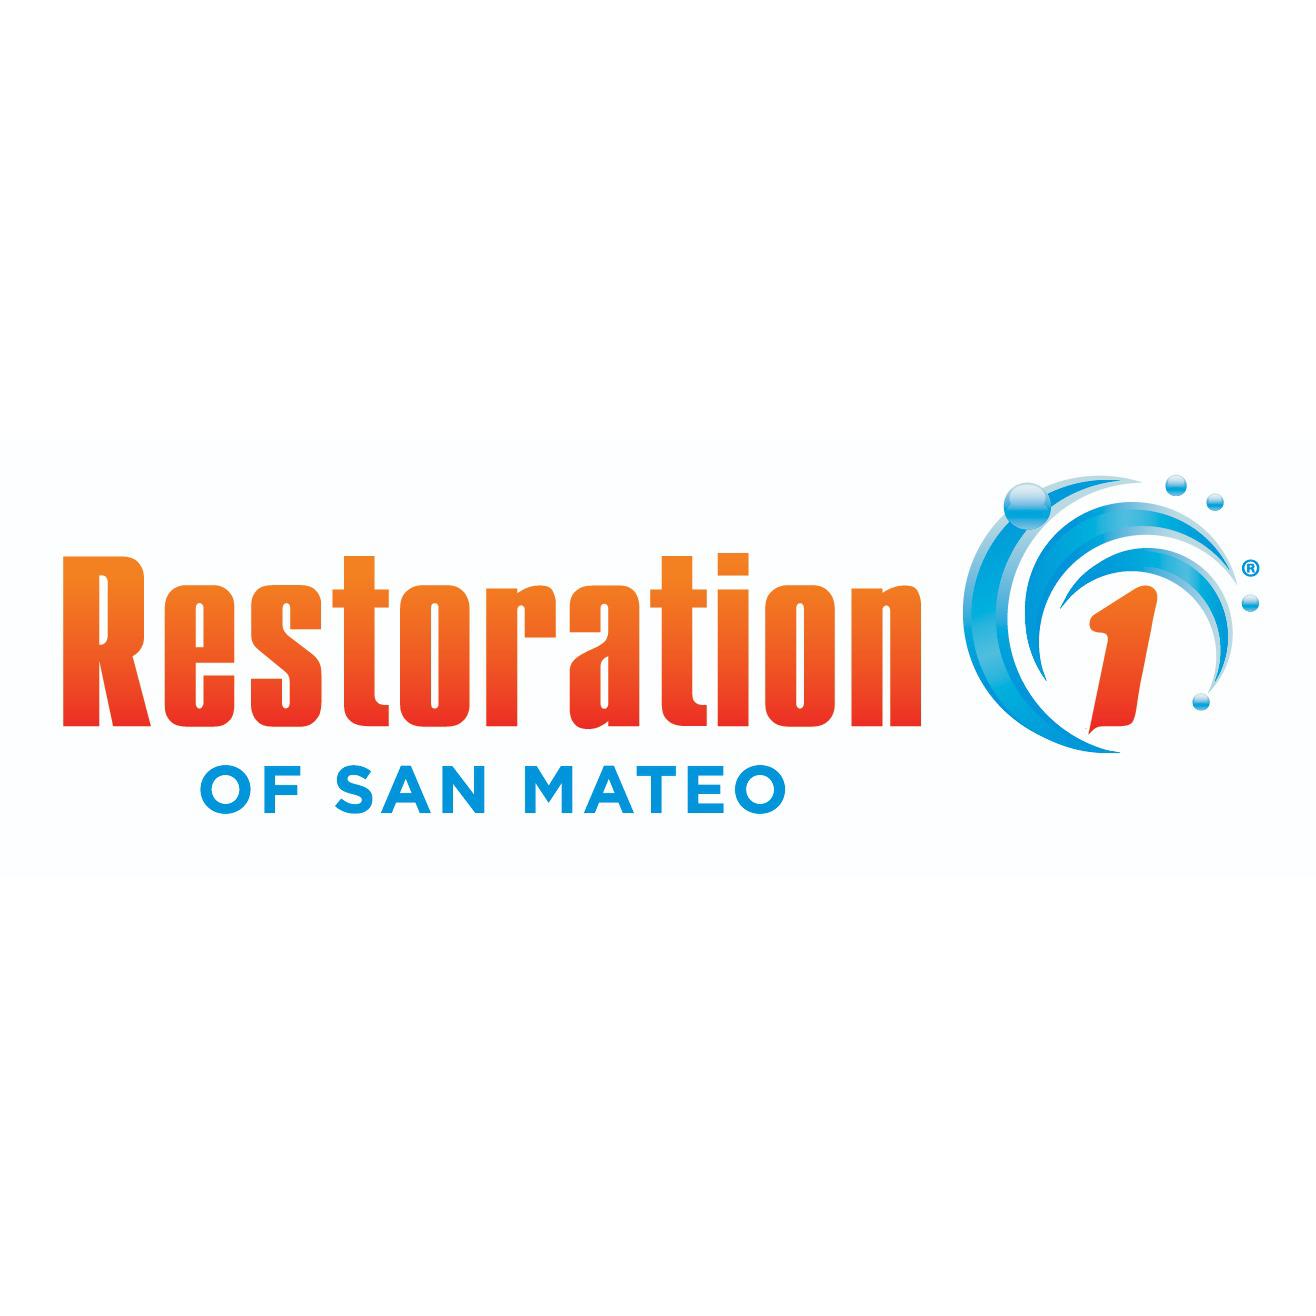 Restoration 1 of San Mateo